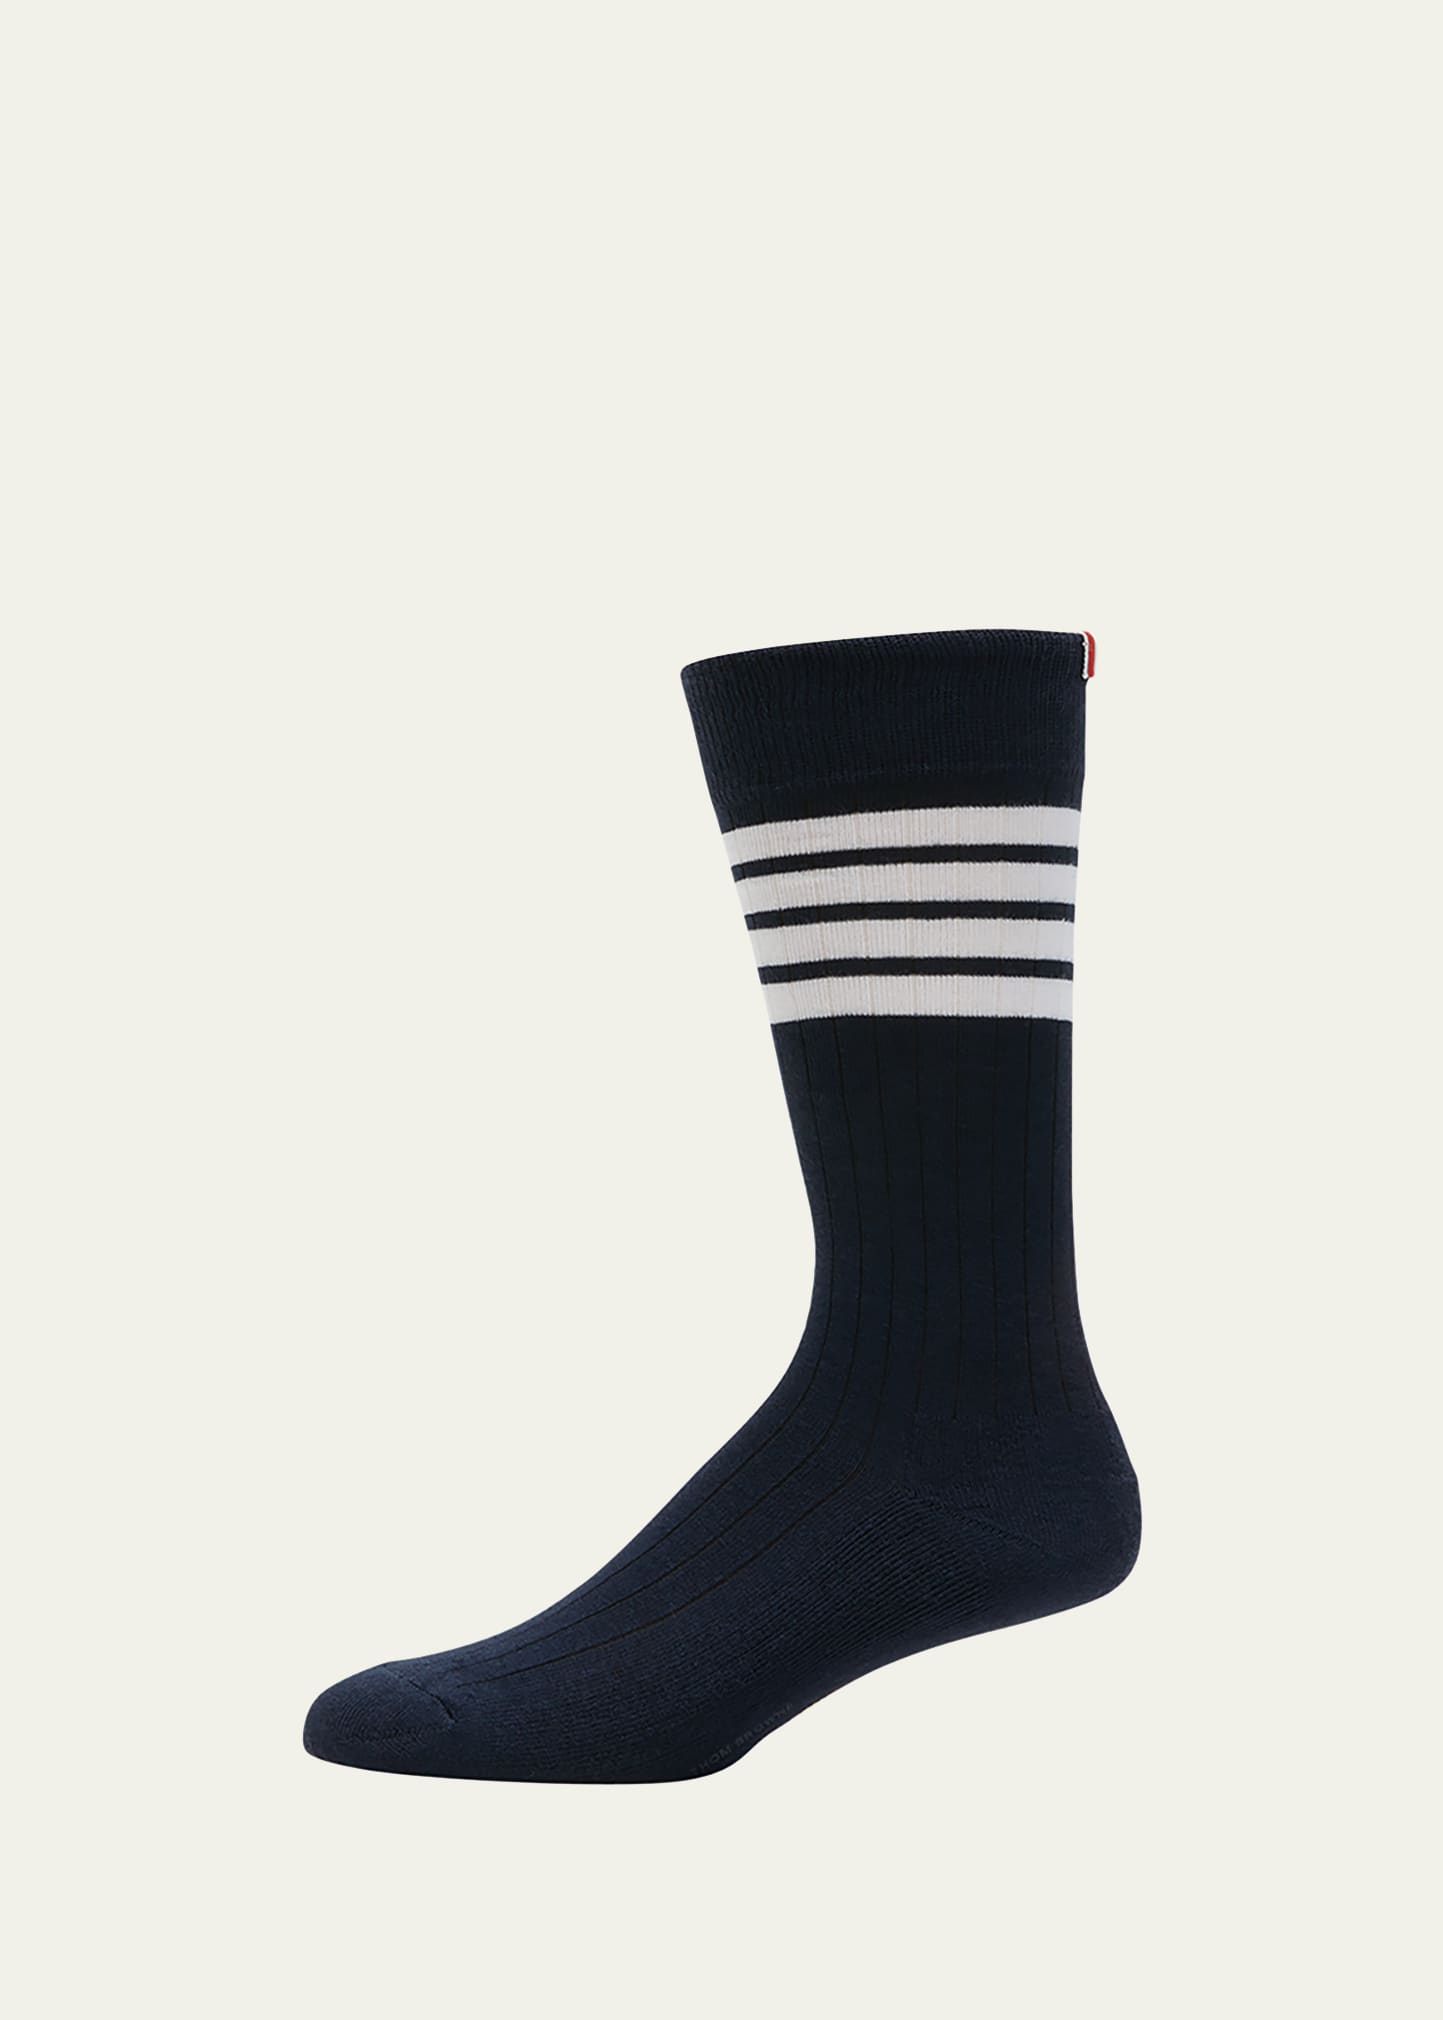 Men's 4-Bar Athletic Mid-Calf Socks